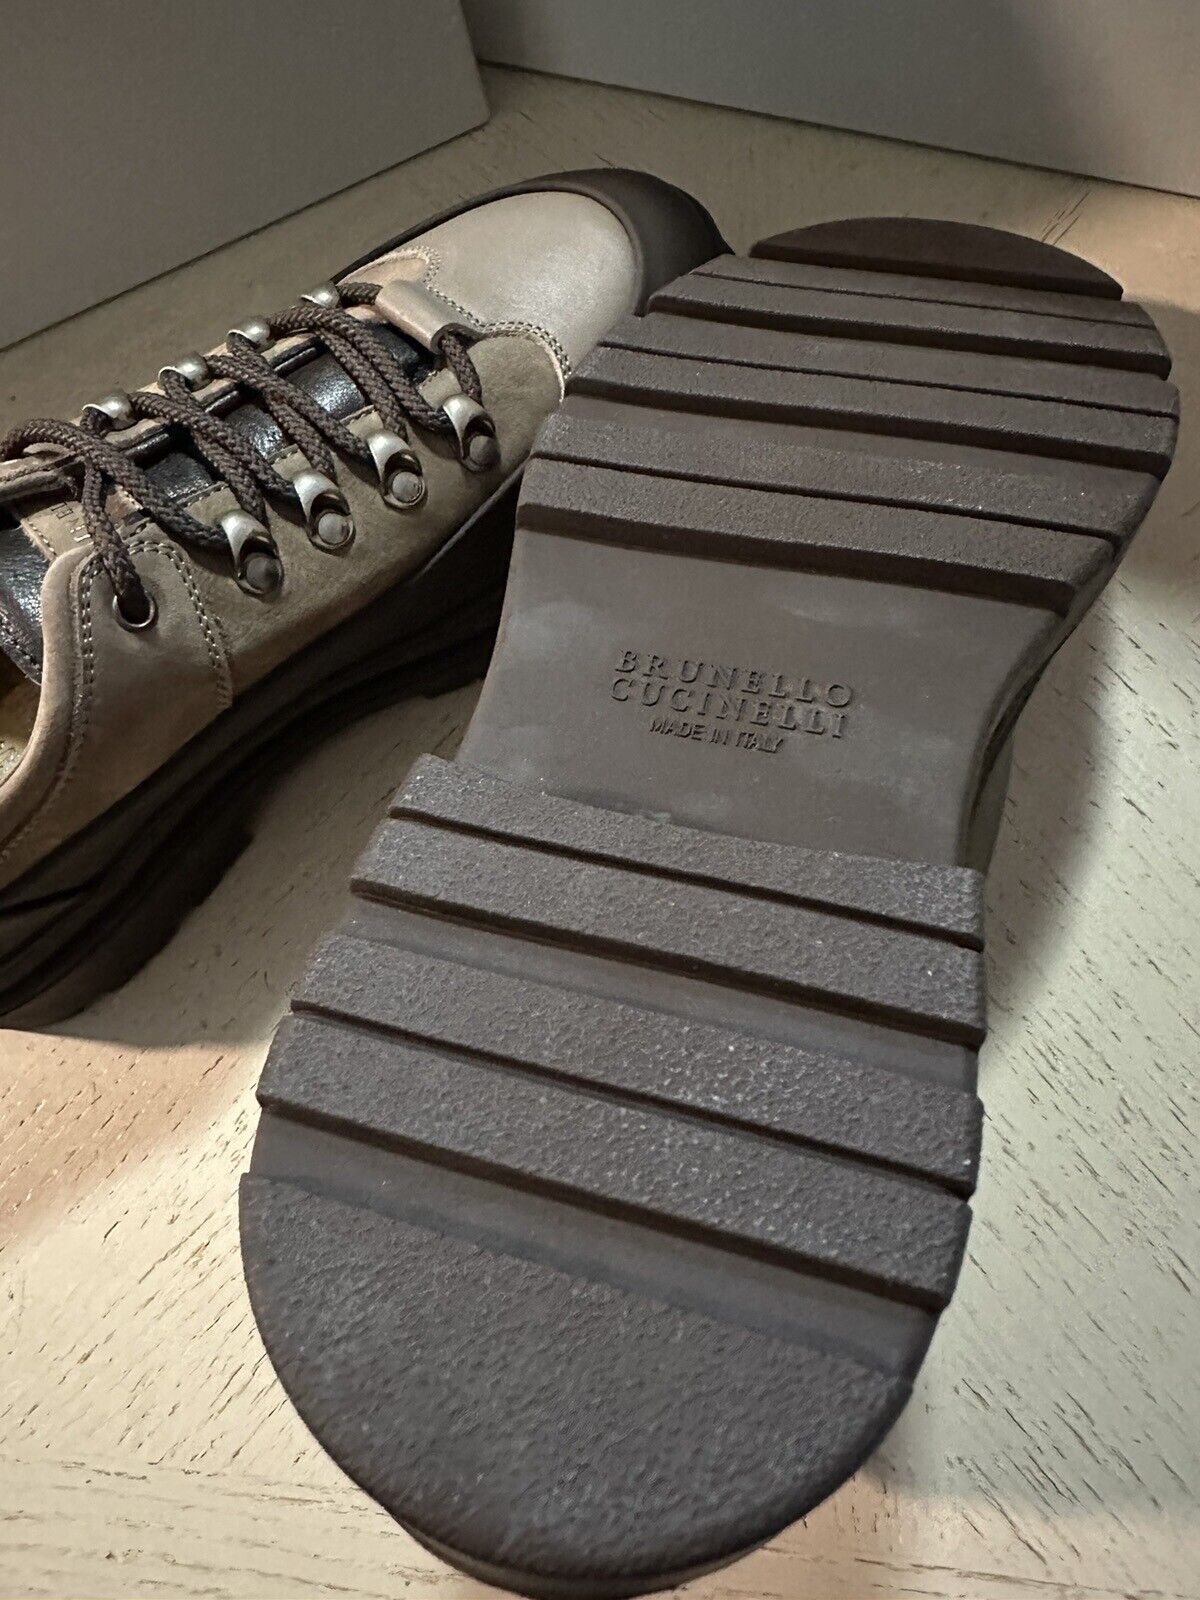 NIB $1295 Brunello Cucinelli Men’s Leather/Suede Shoes Brown/Beige 9 US/42 Eu